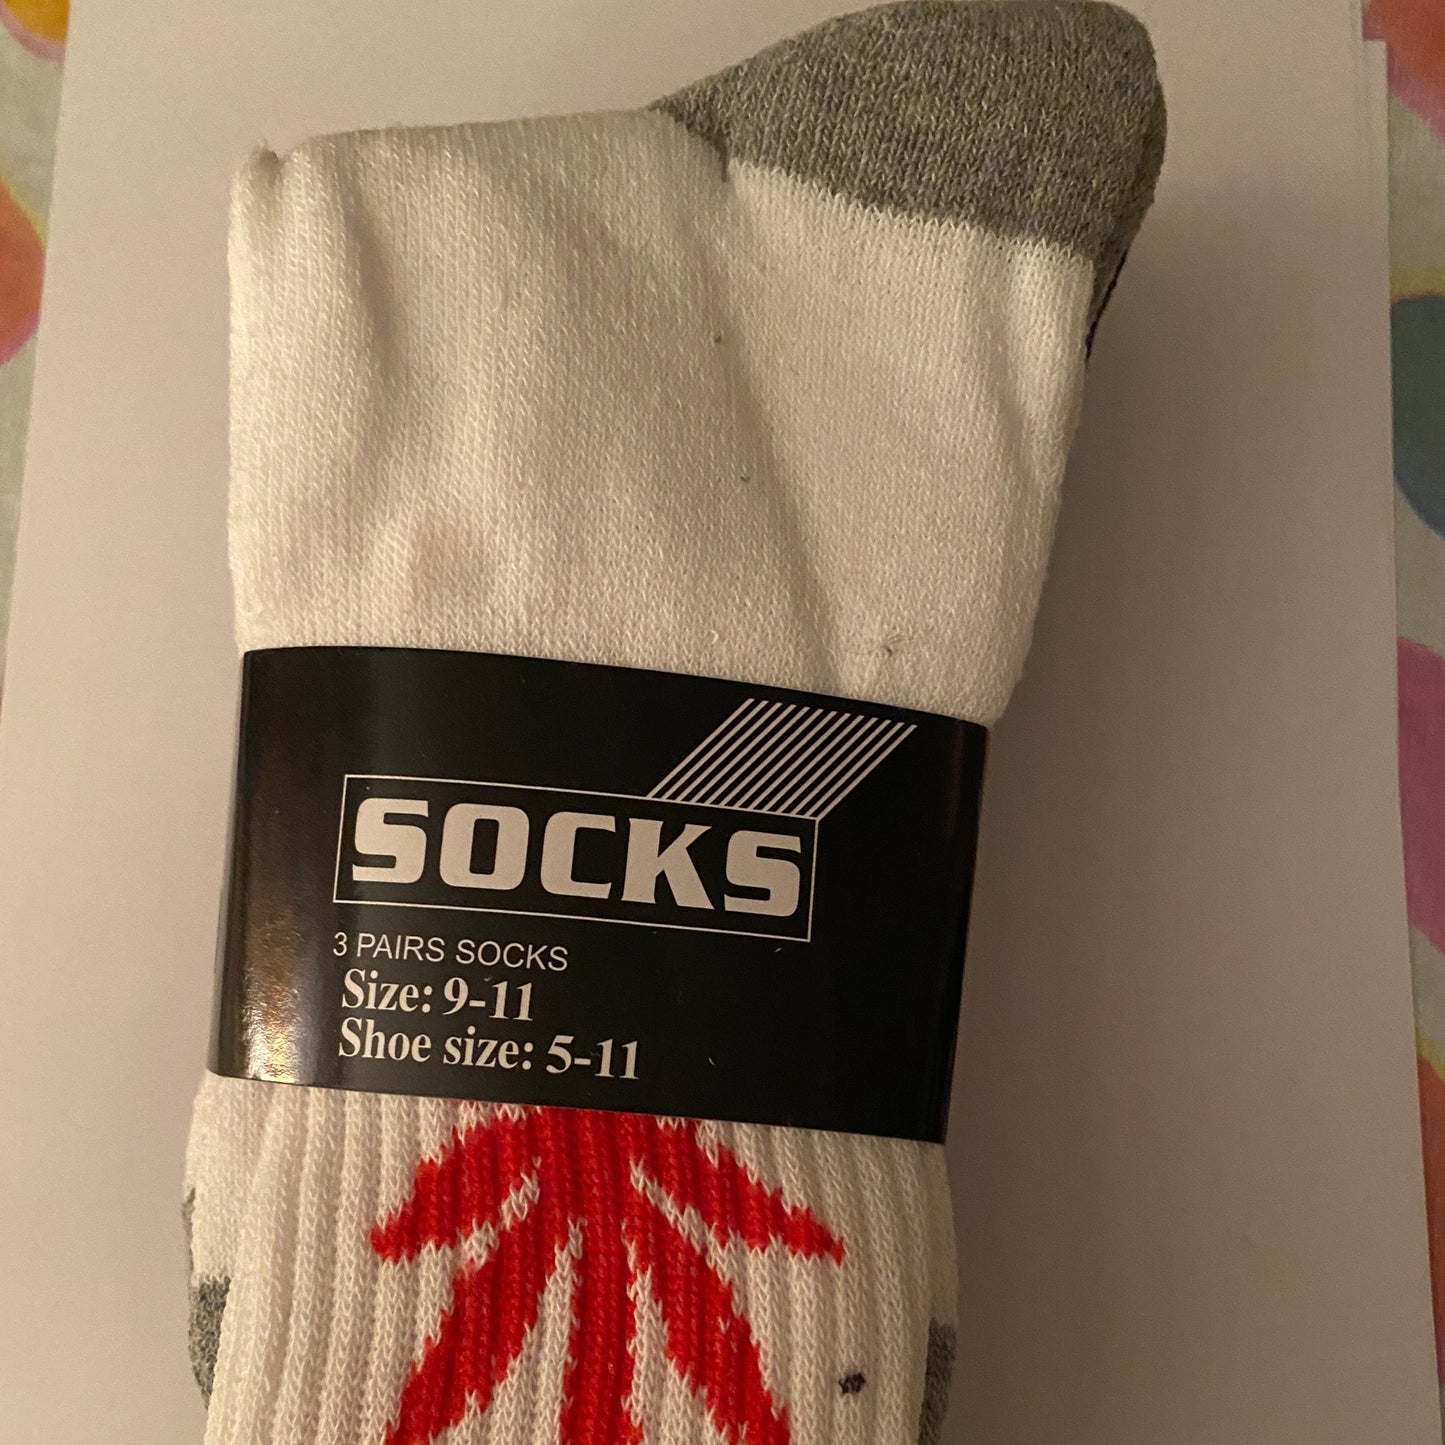 Socks 3 Pair ribbed socks with leaf design